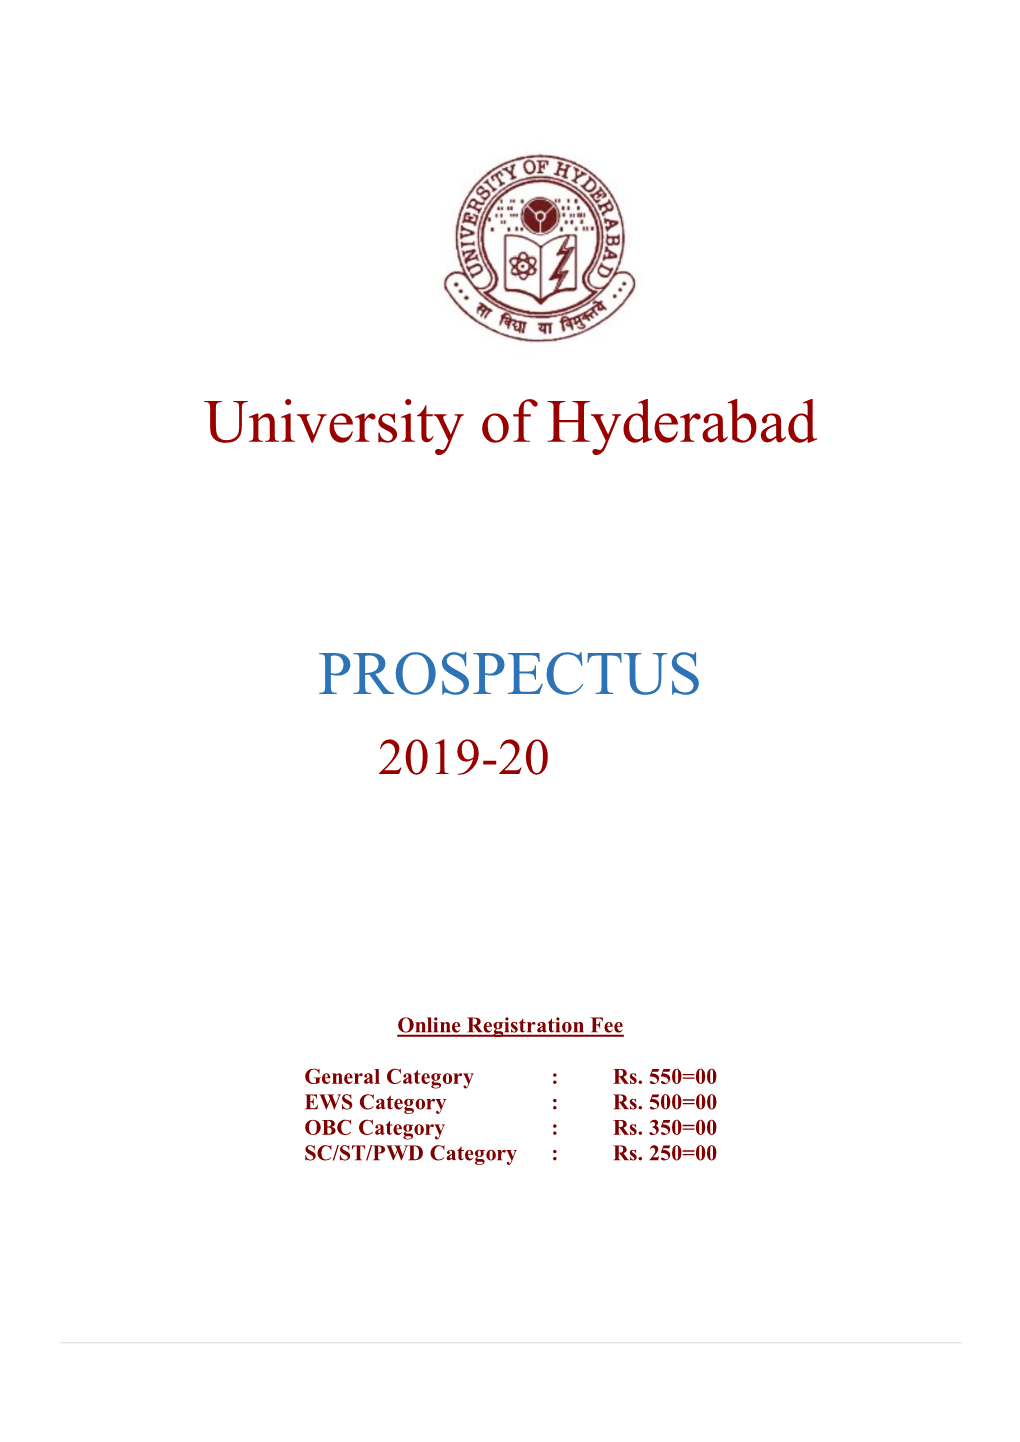 University of Hyderabad PROSPECTUS